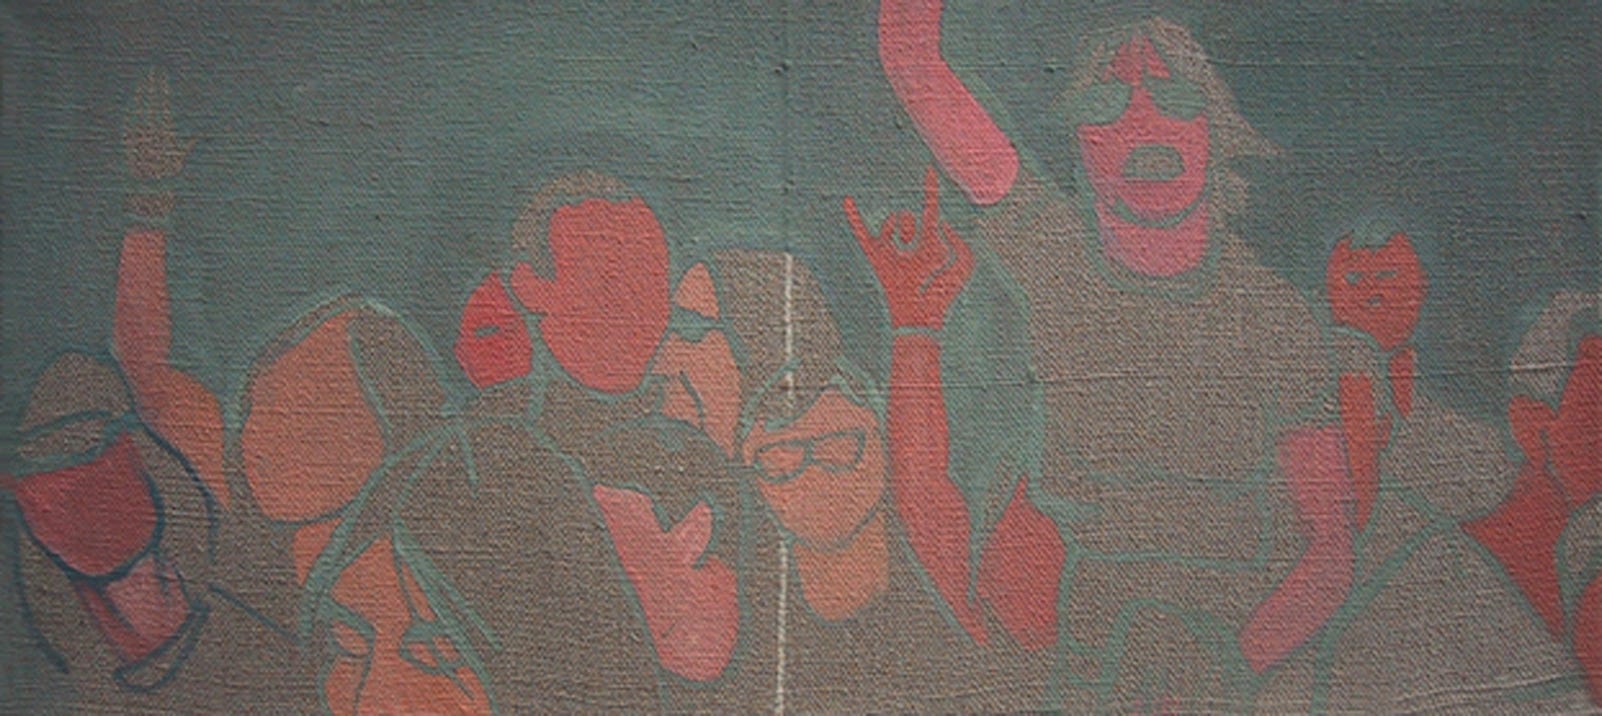 24x53 cm, oil on canvas, 2008